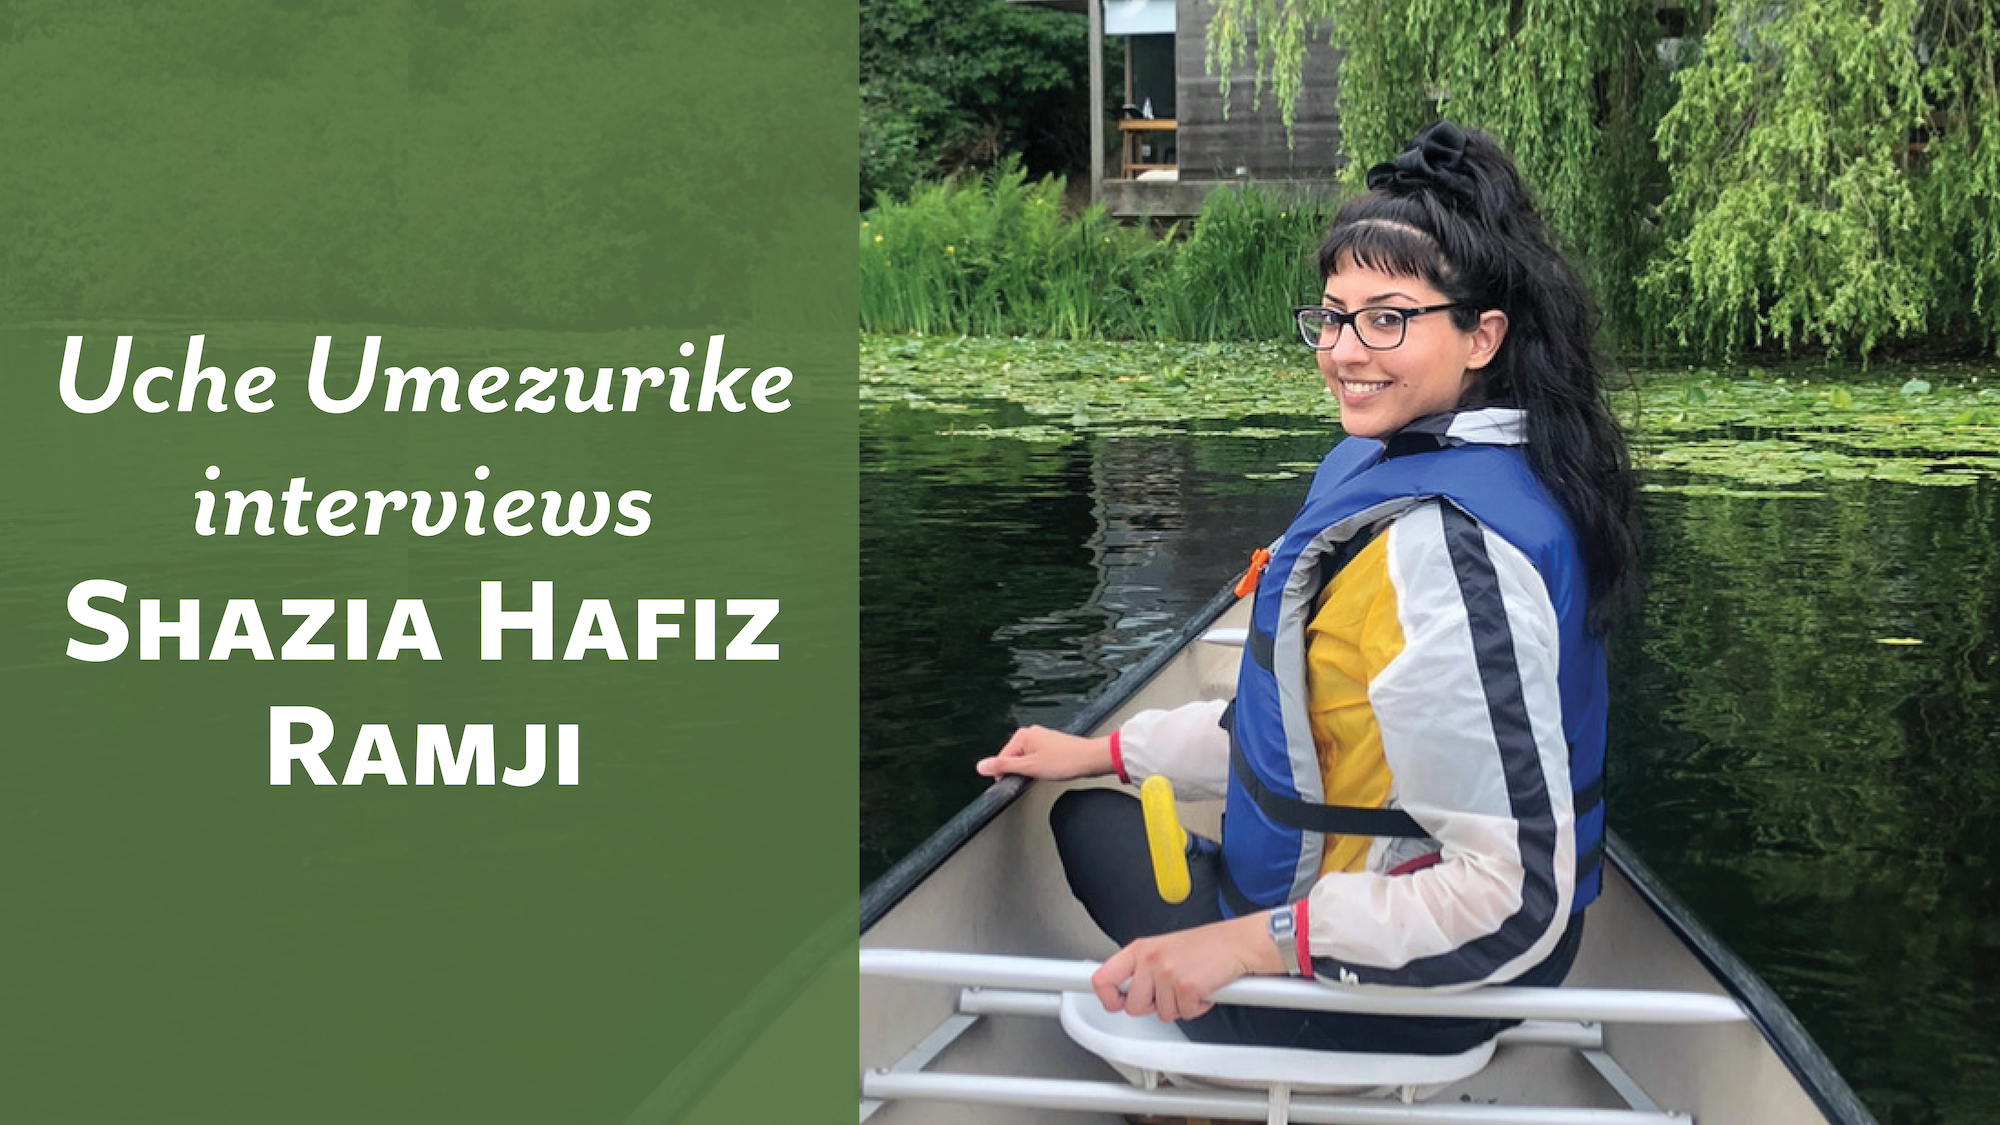 Uche Umezurike interviews Shazia Hafiz Ramji